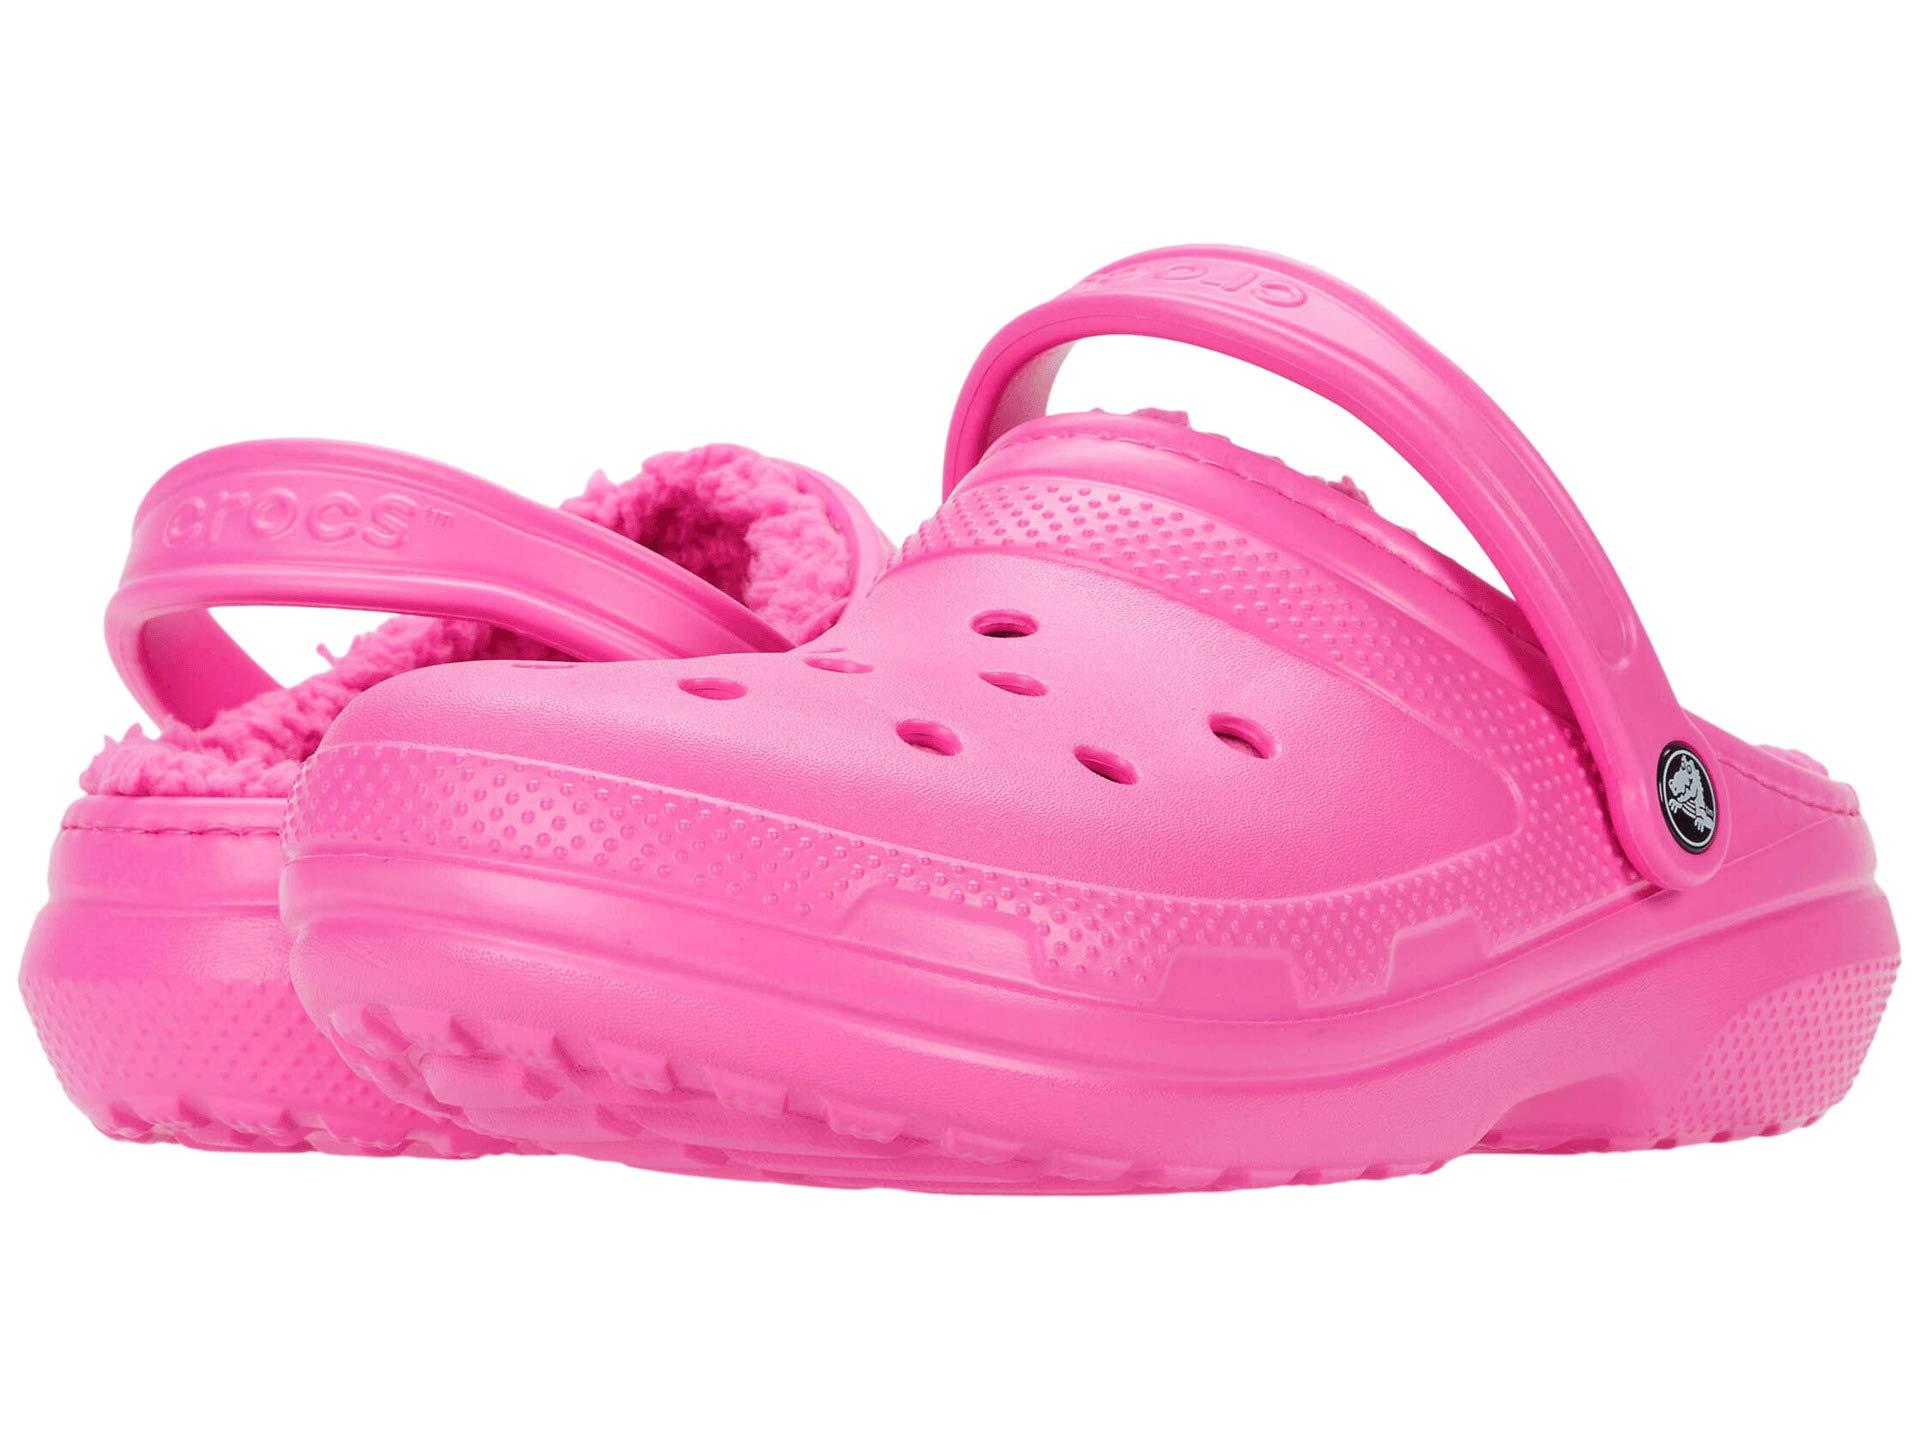 pink crocs with fur